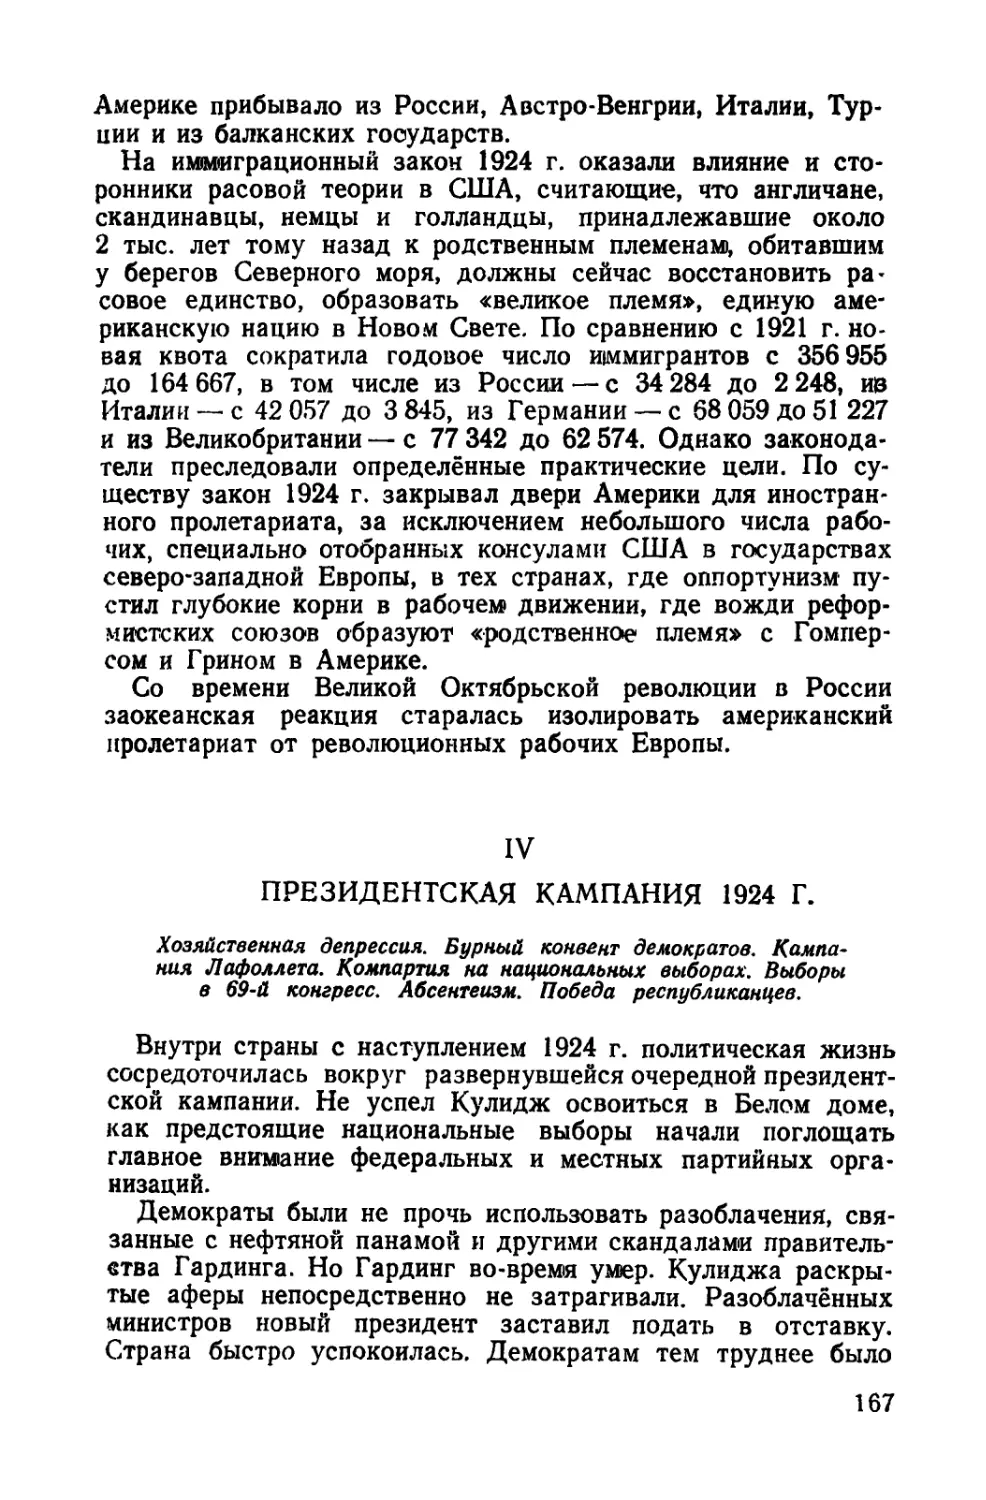 IV. Президентская кампания 1924 г